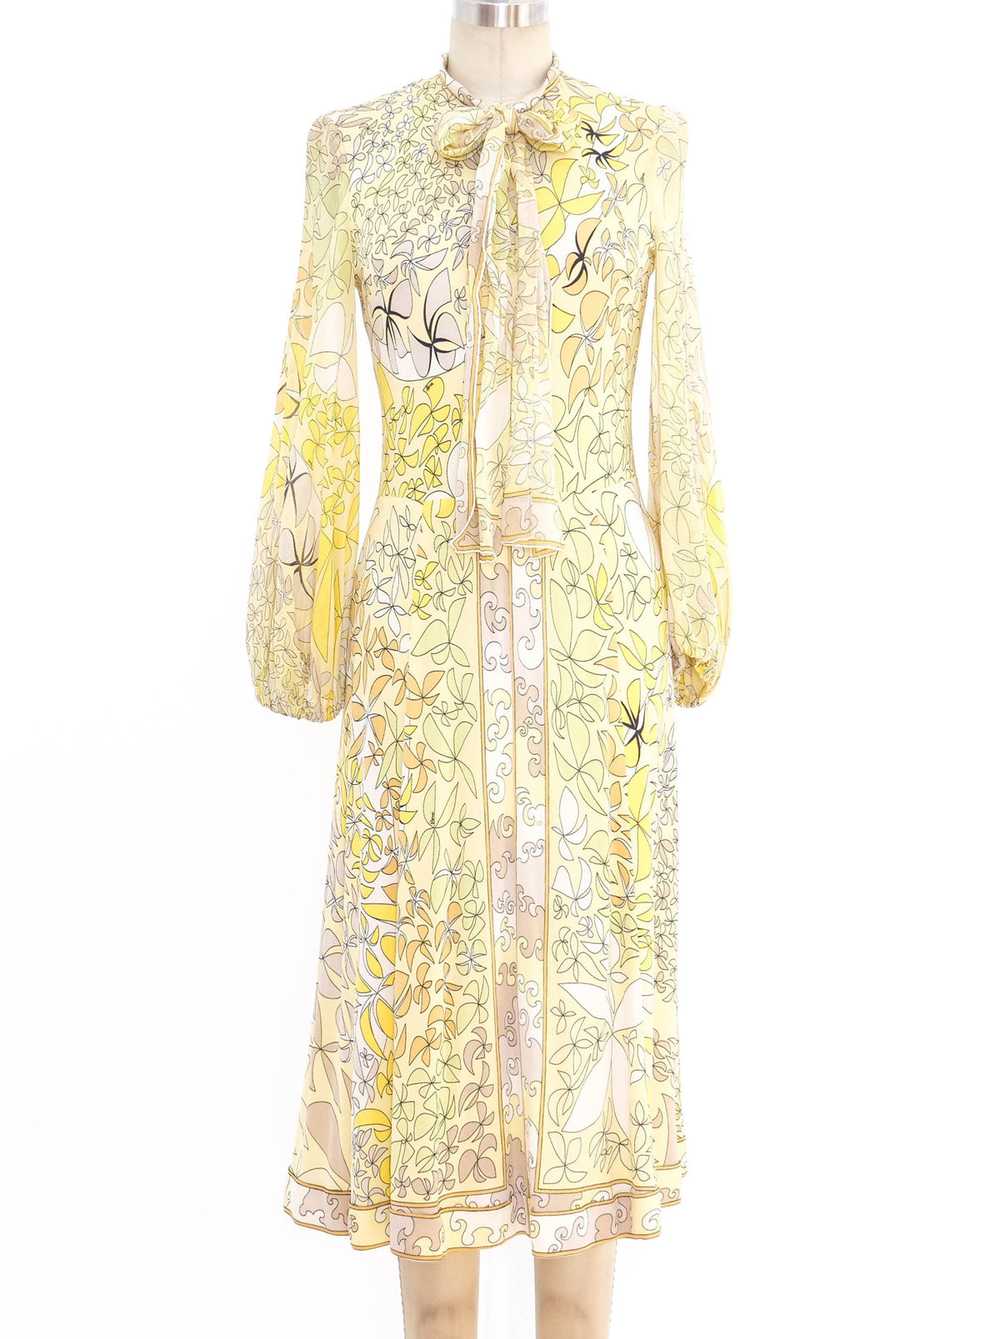 Bessi Printed Silk Jersey Dress - image 1